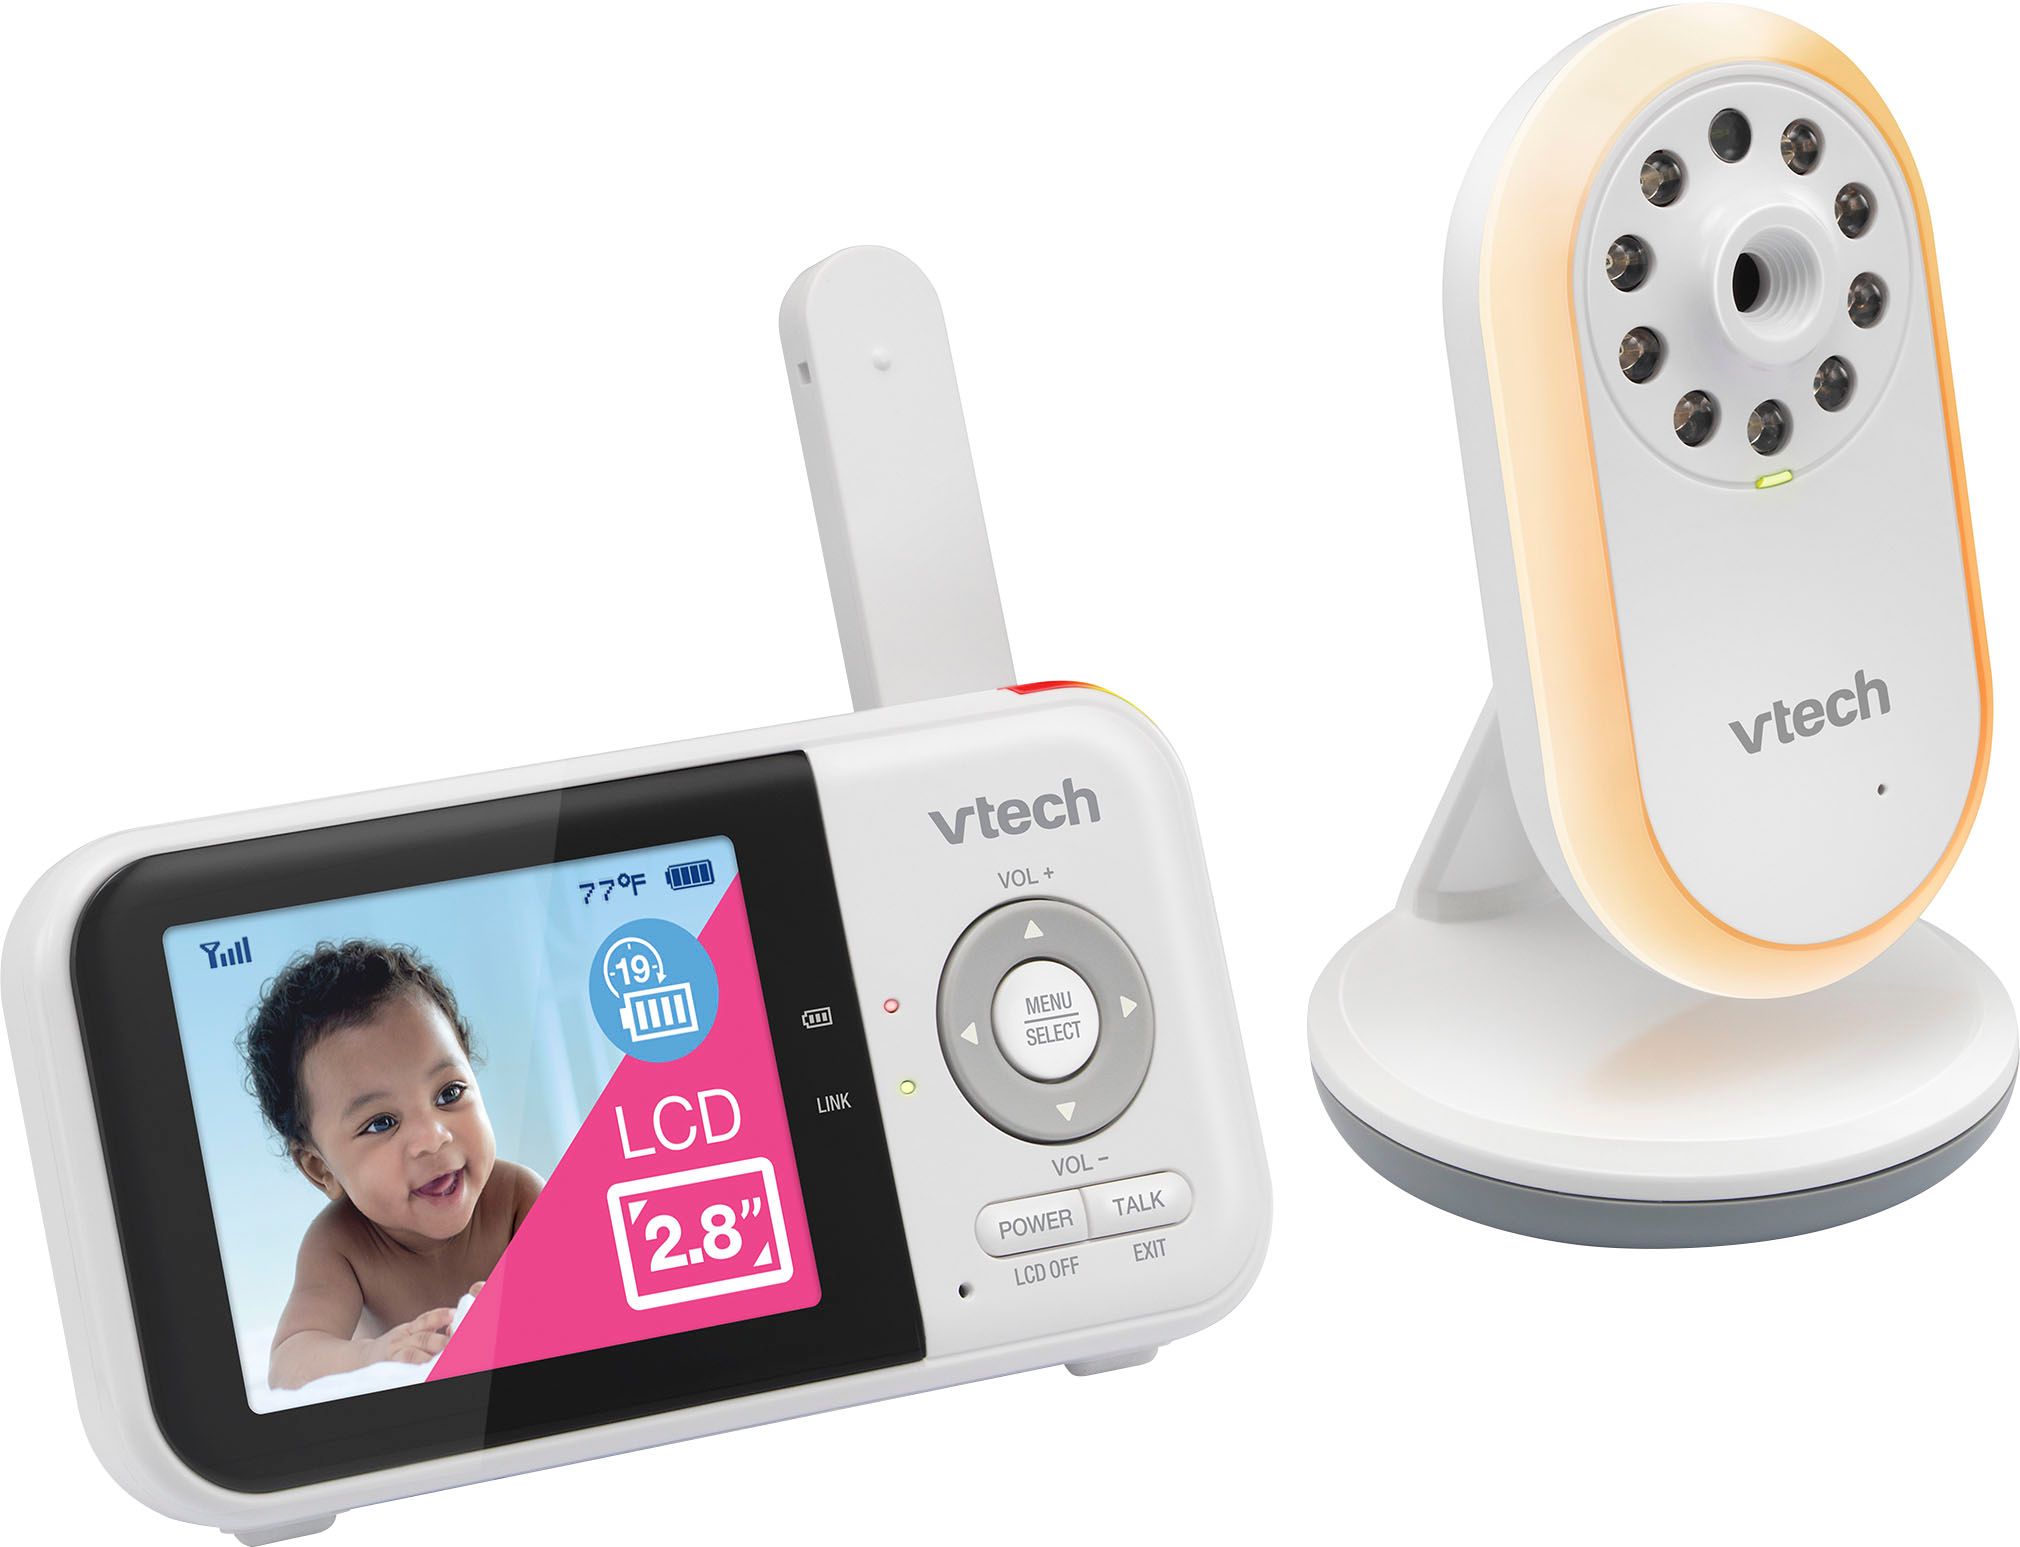 VTech 2.8” Digital Video Baby Monitor with Night Light White VM3258 - Best  Buy